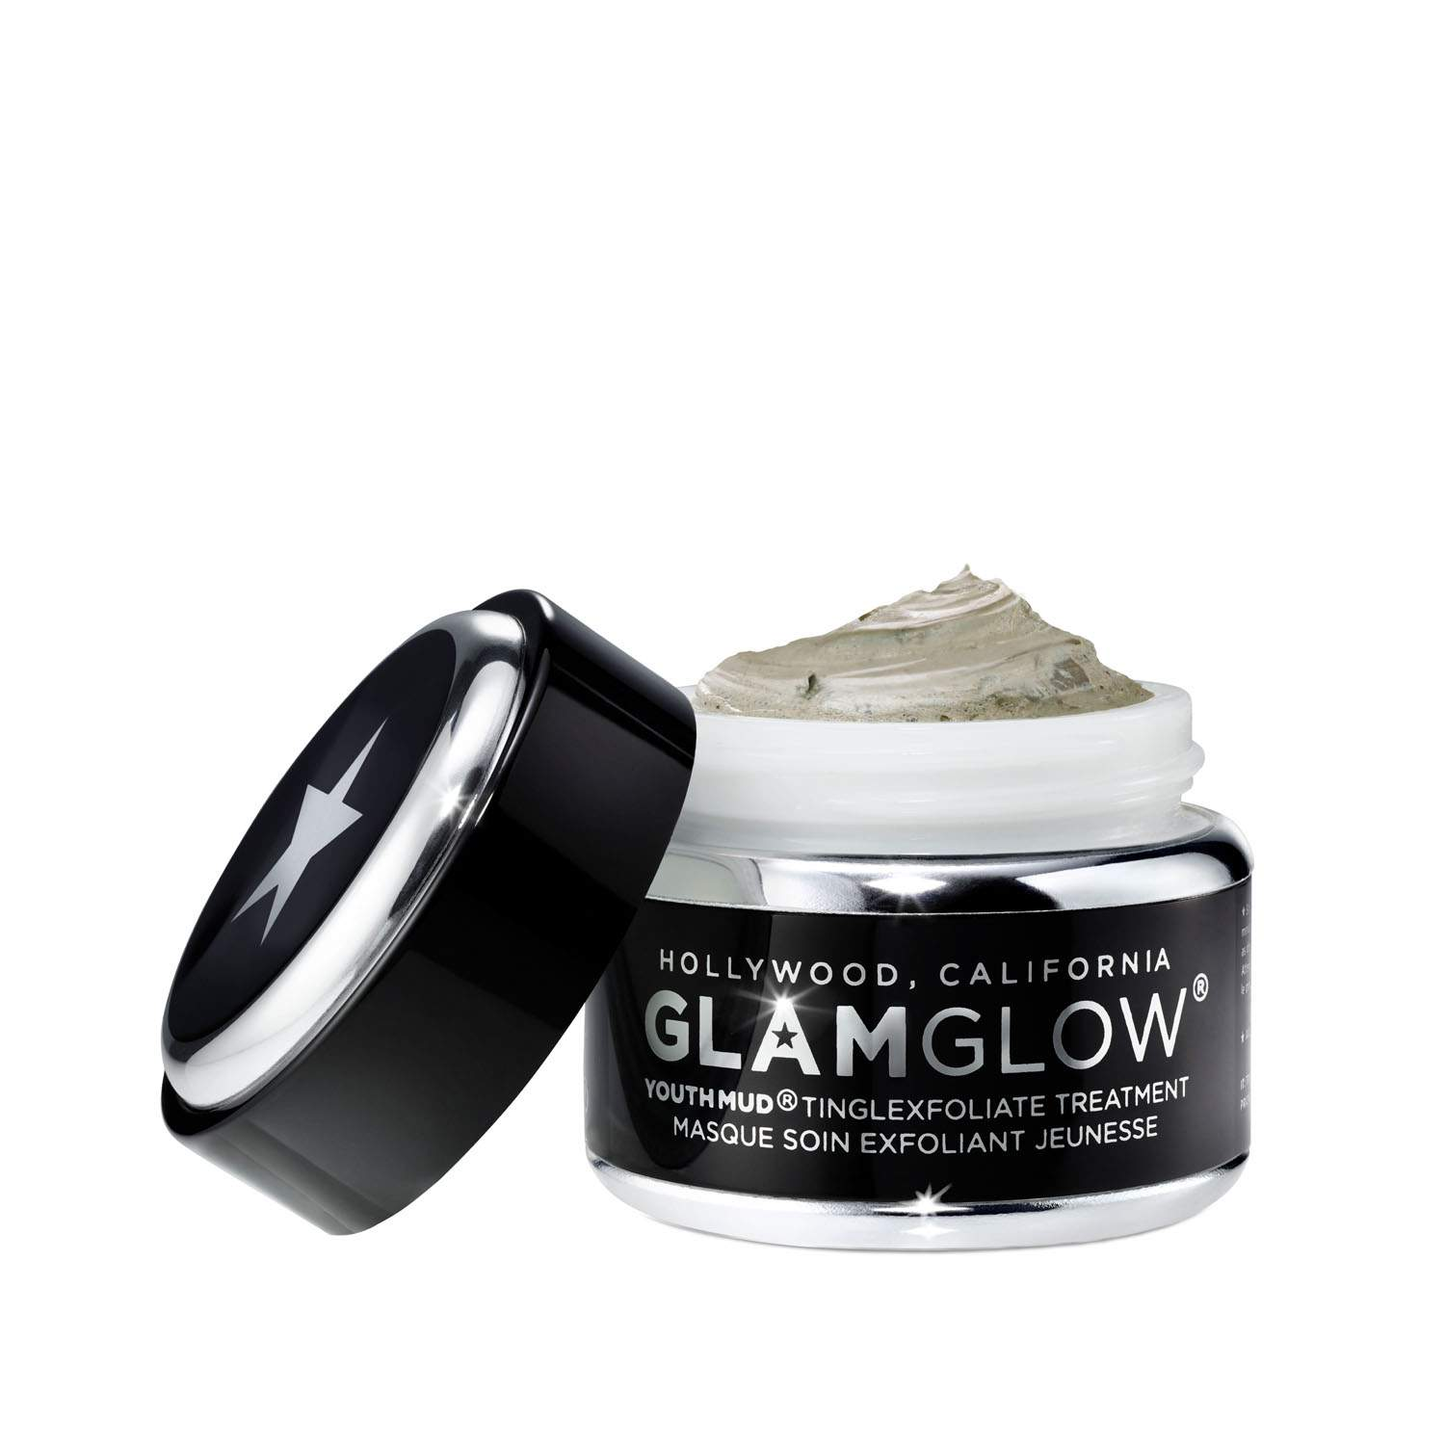 GLAMGLOW YOUTHMUD Tinglexfoliate Mask Treatment